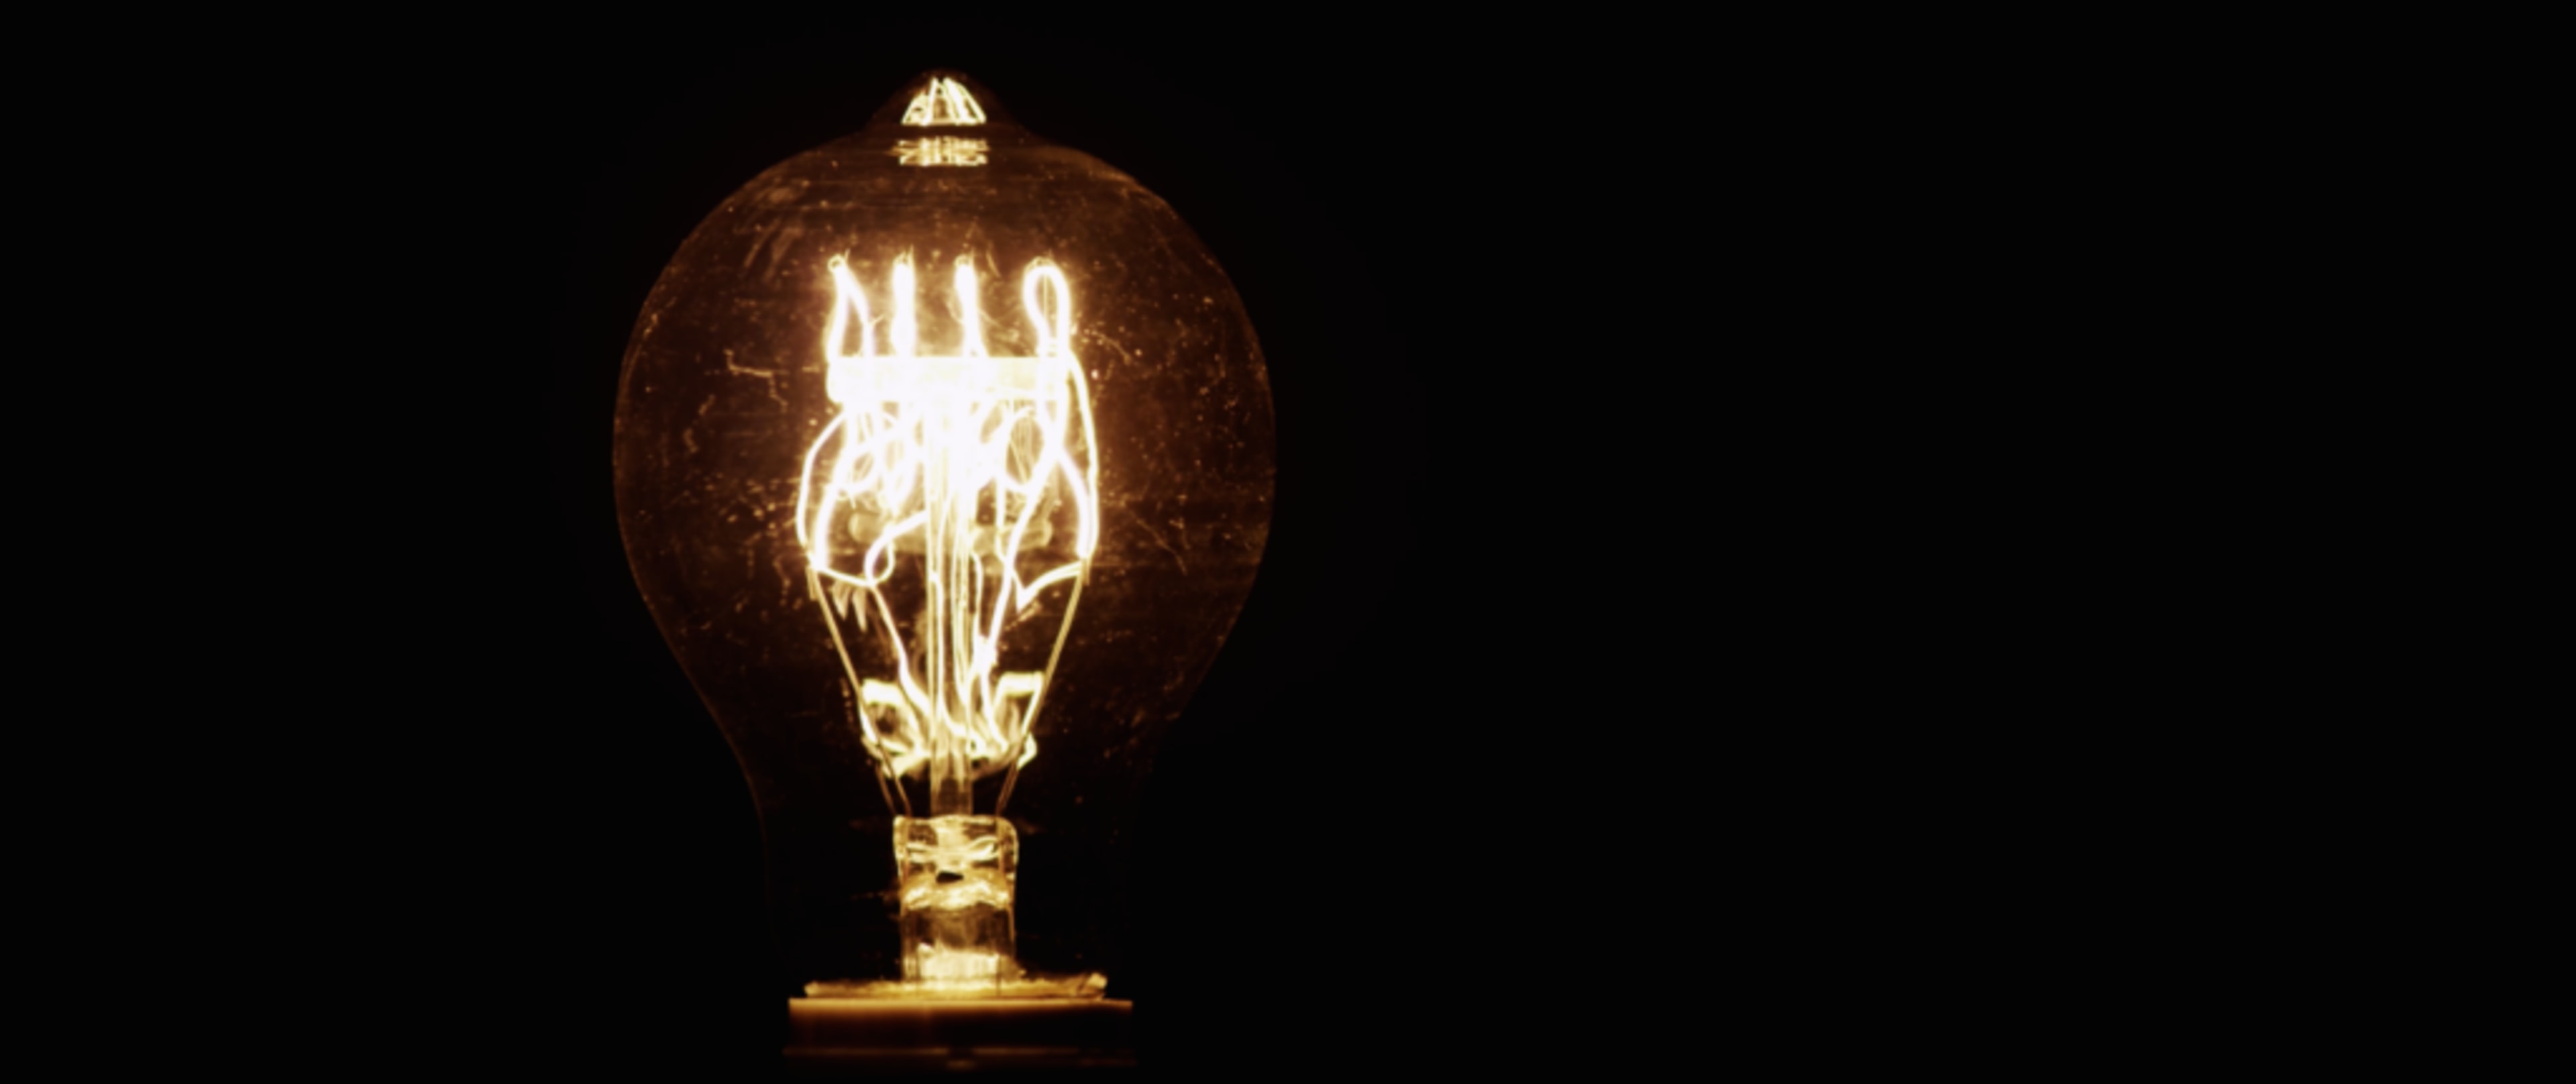 Close up of a illuminated light bulb symbolizing a new app idea.